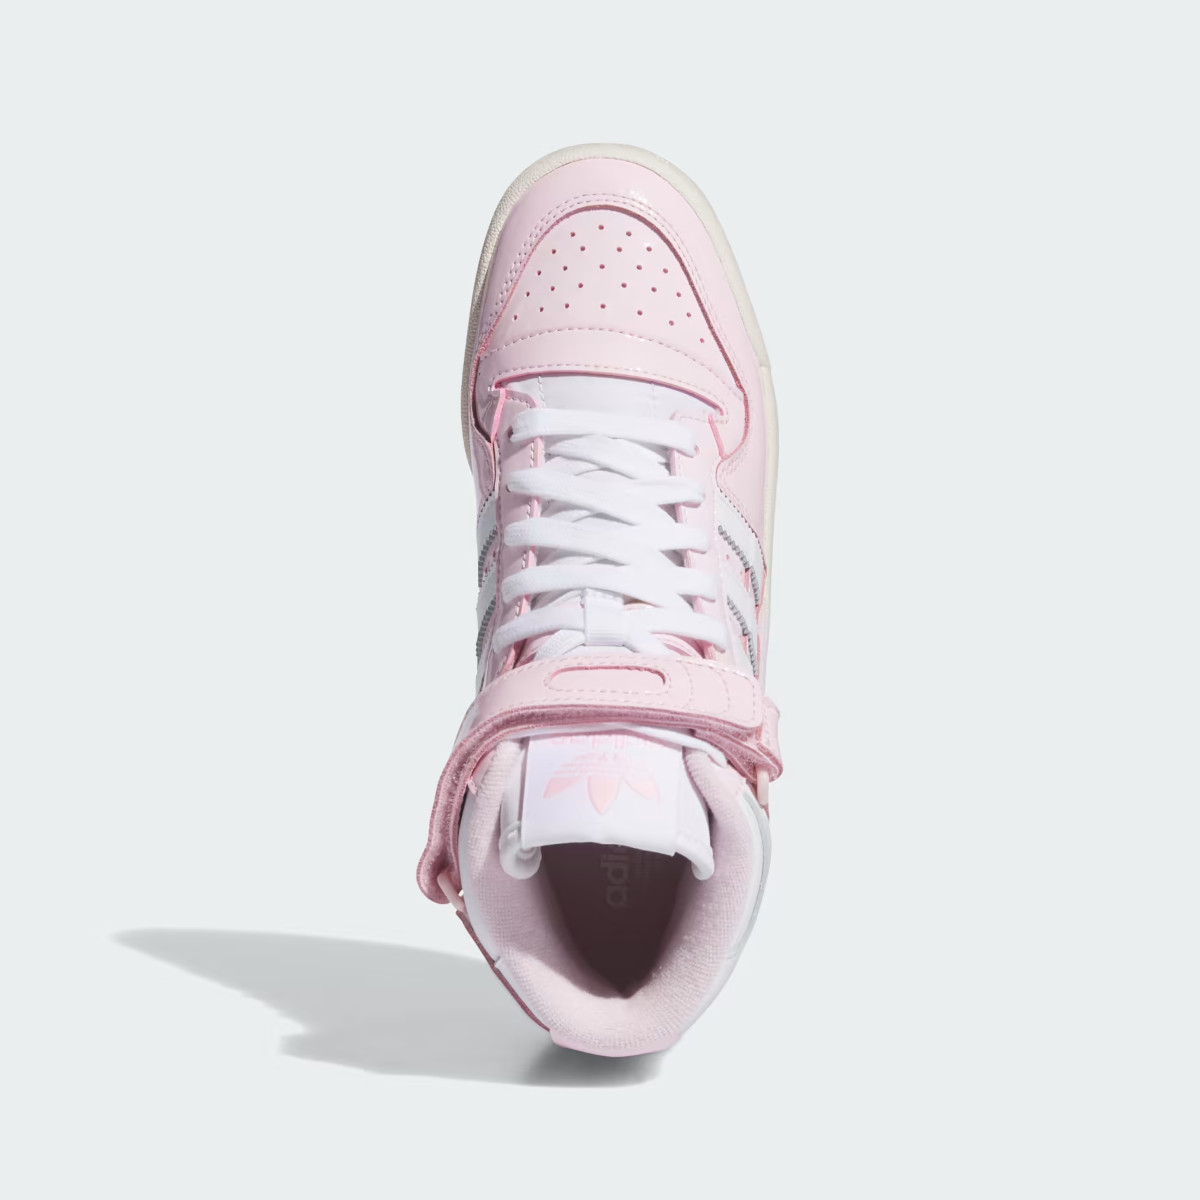 Adidas Forum Mid Pink White Cream Ie7417 2